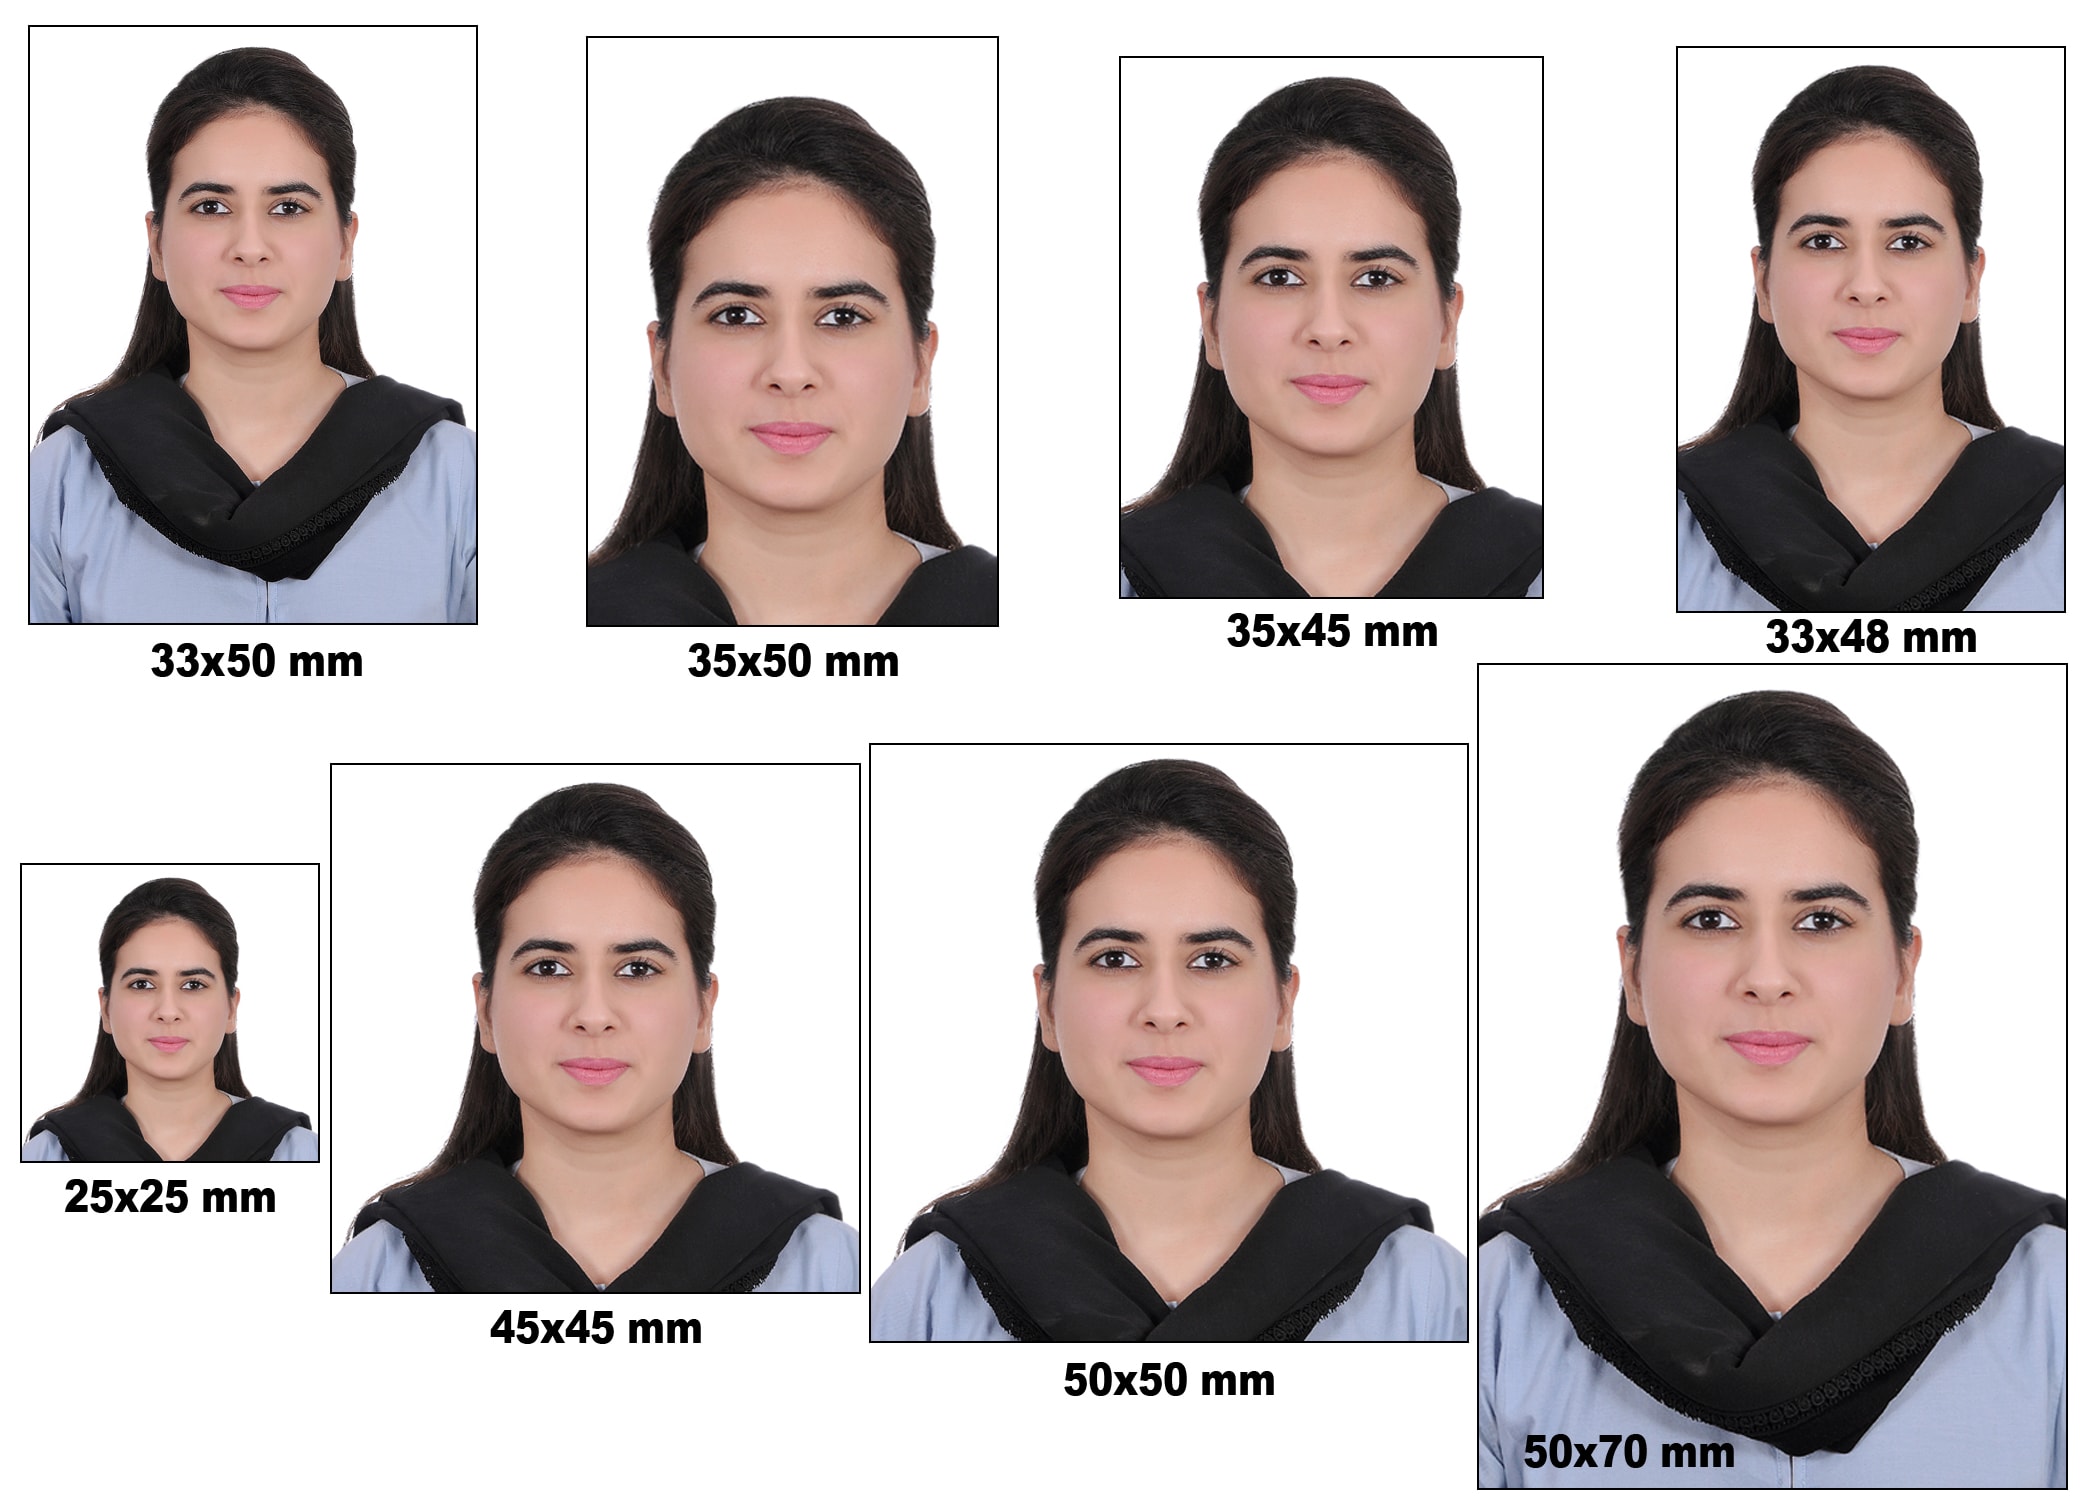 passport photo dimensions